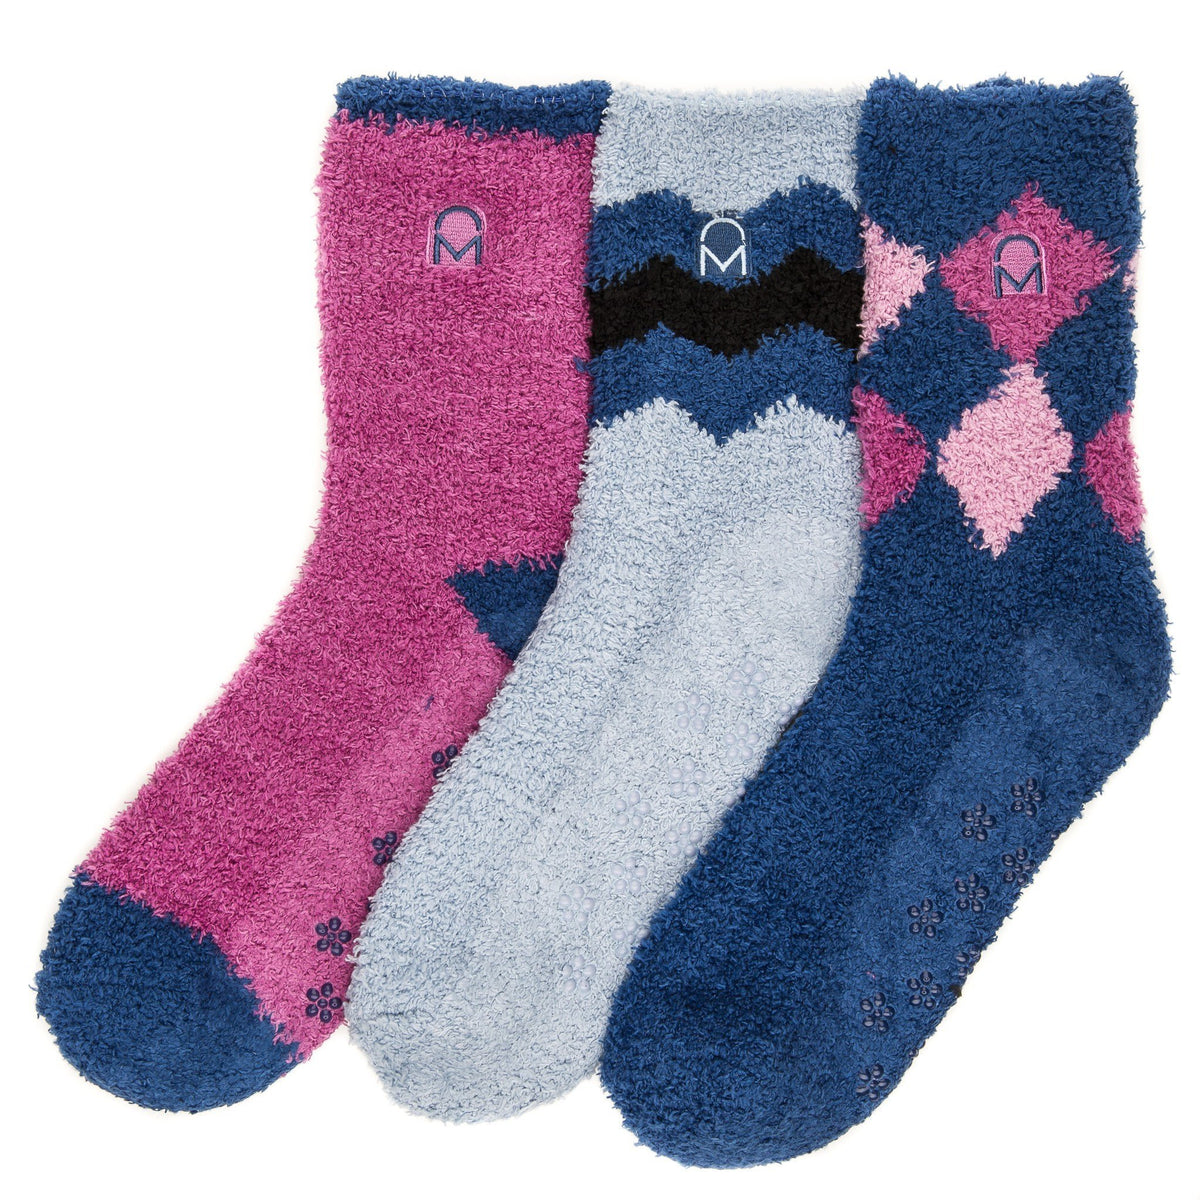 Women's (3 Pairs) Soft Anti-Skid Fuzzy Winter Crew Socks - Set A8